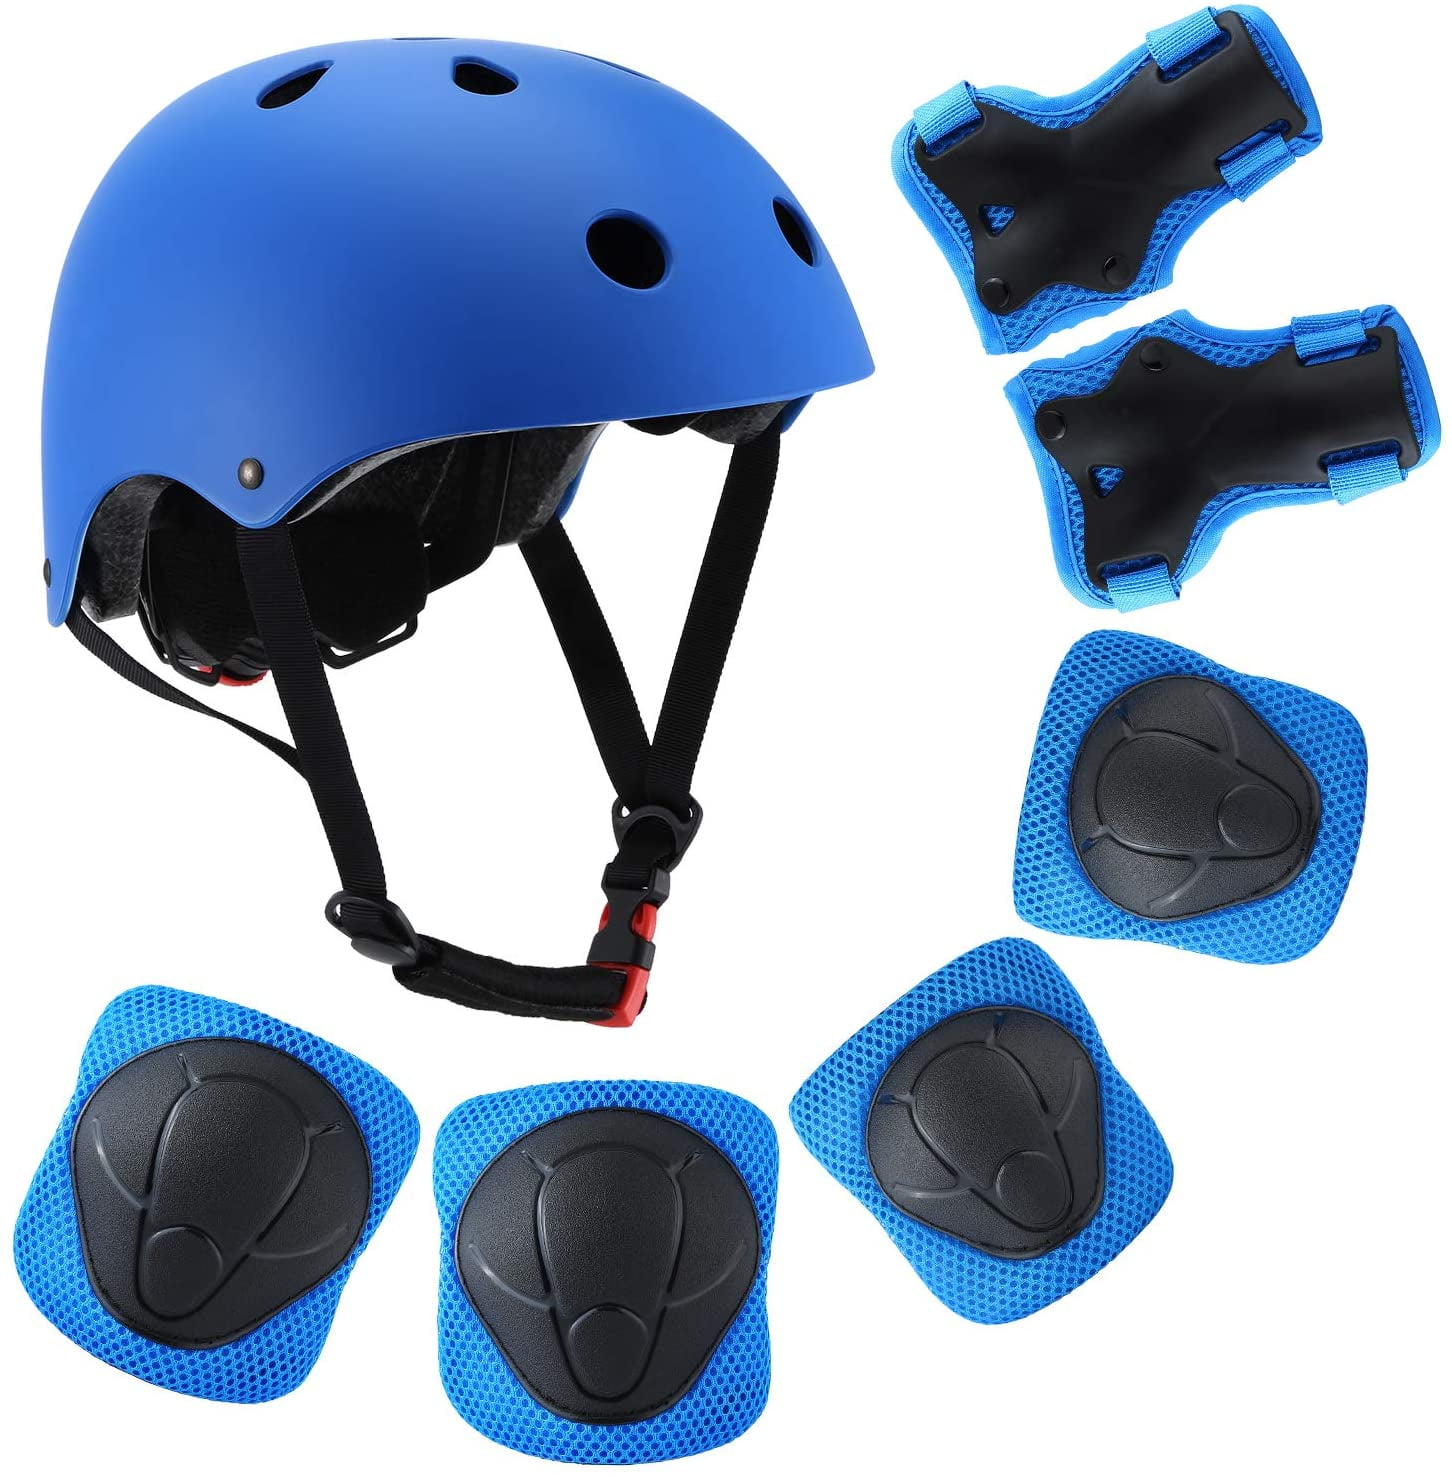 Adjustable Children Kids Safety Helmet Bike Cycling Skating Helmets Boys Girls 